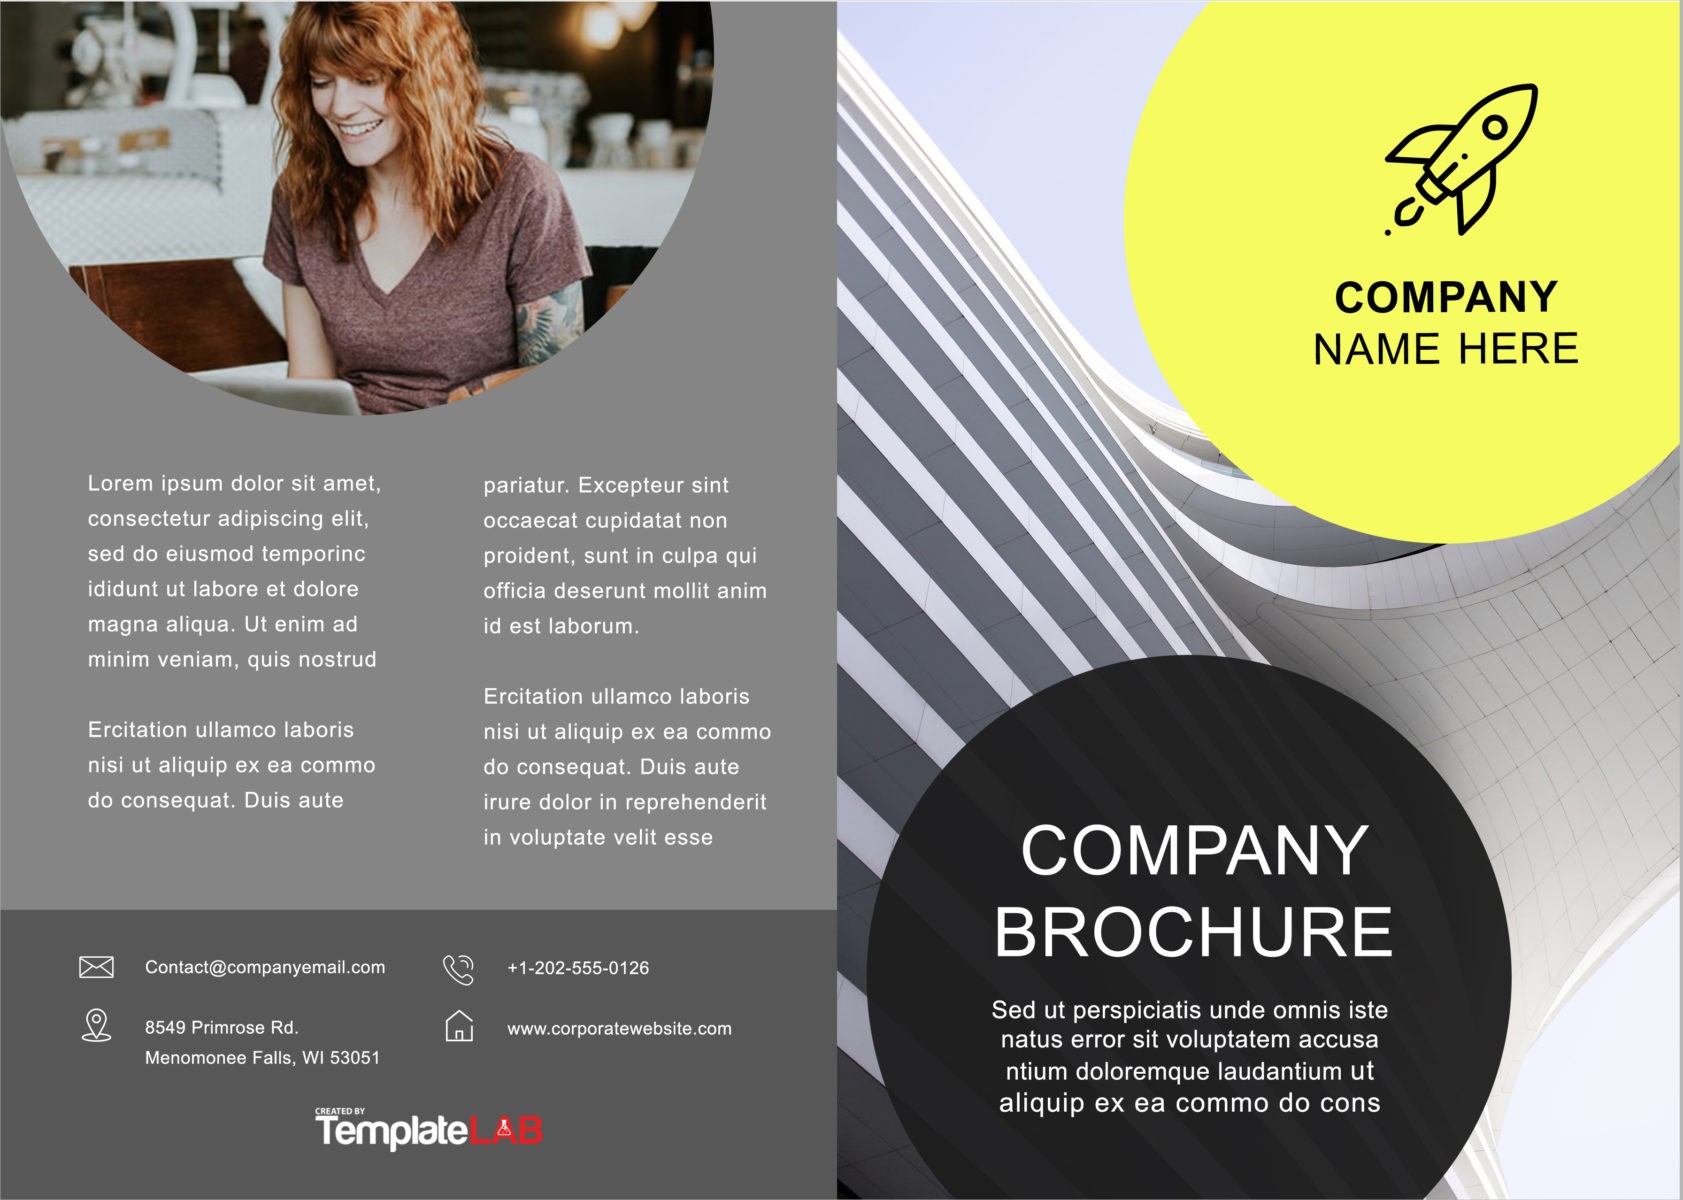 33 FREE Brochure Templates (Word + PDF) ᐅ TemplateLab